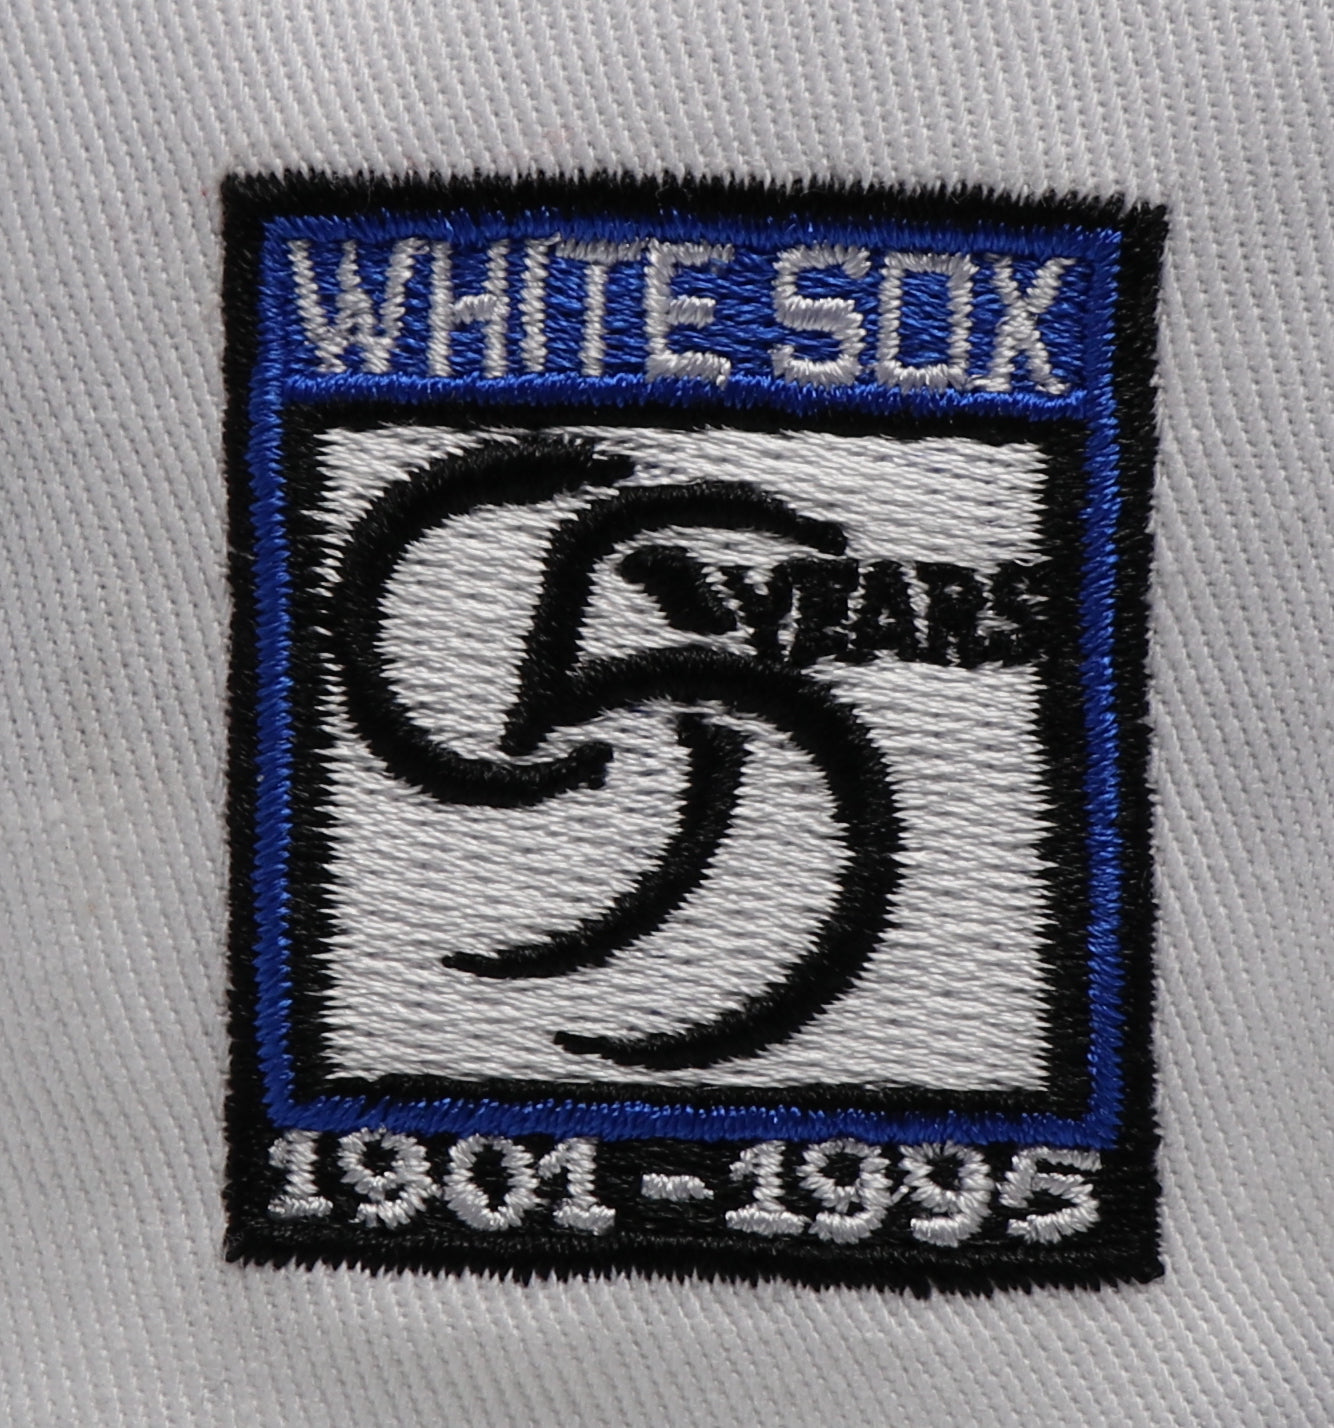 CHICAGO WHITESOX (WHITE) (95TH ANNIVERSARY) NEW ERA 59FIFTY FITTED (REFLECTIVE UNDER VISOR)